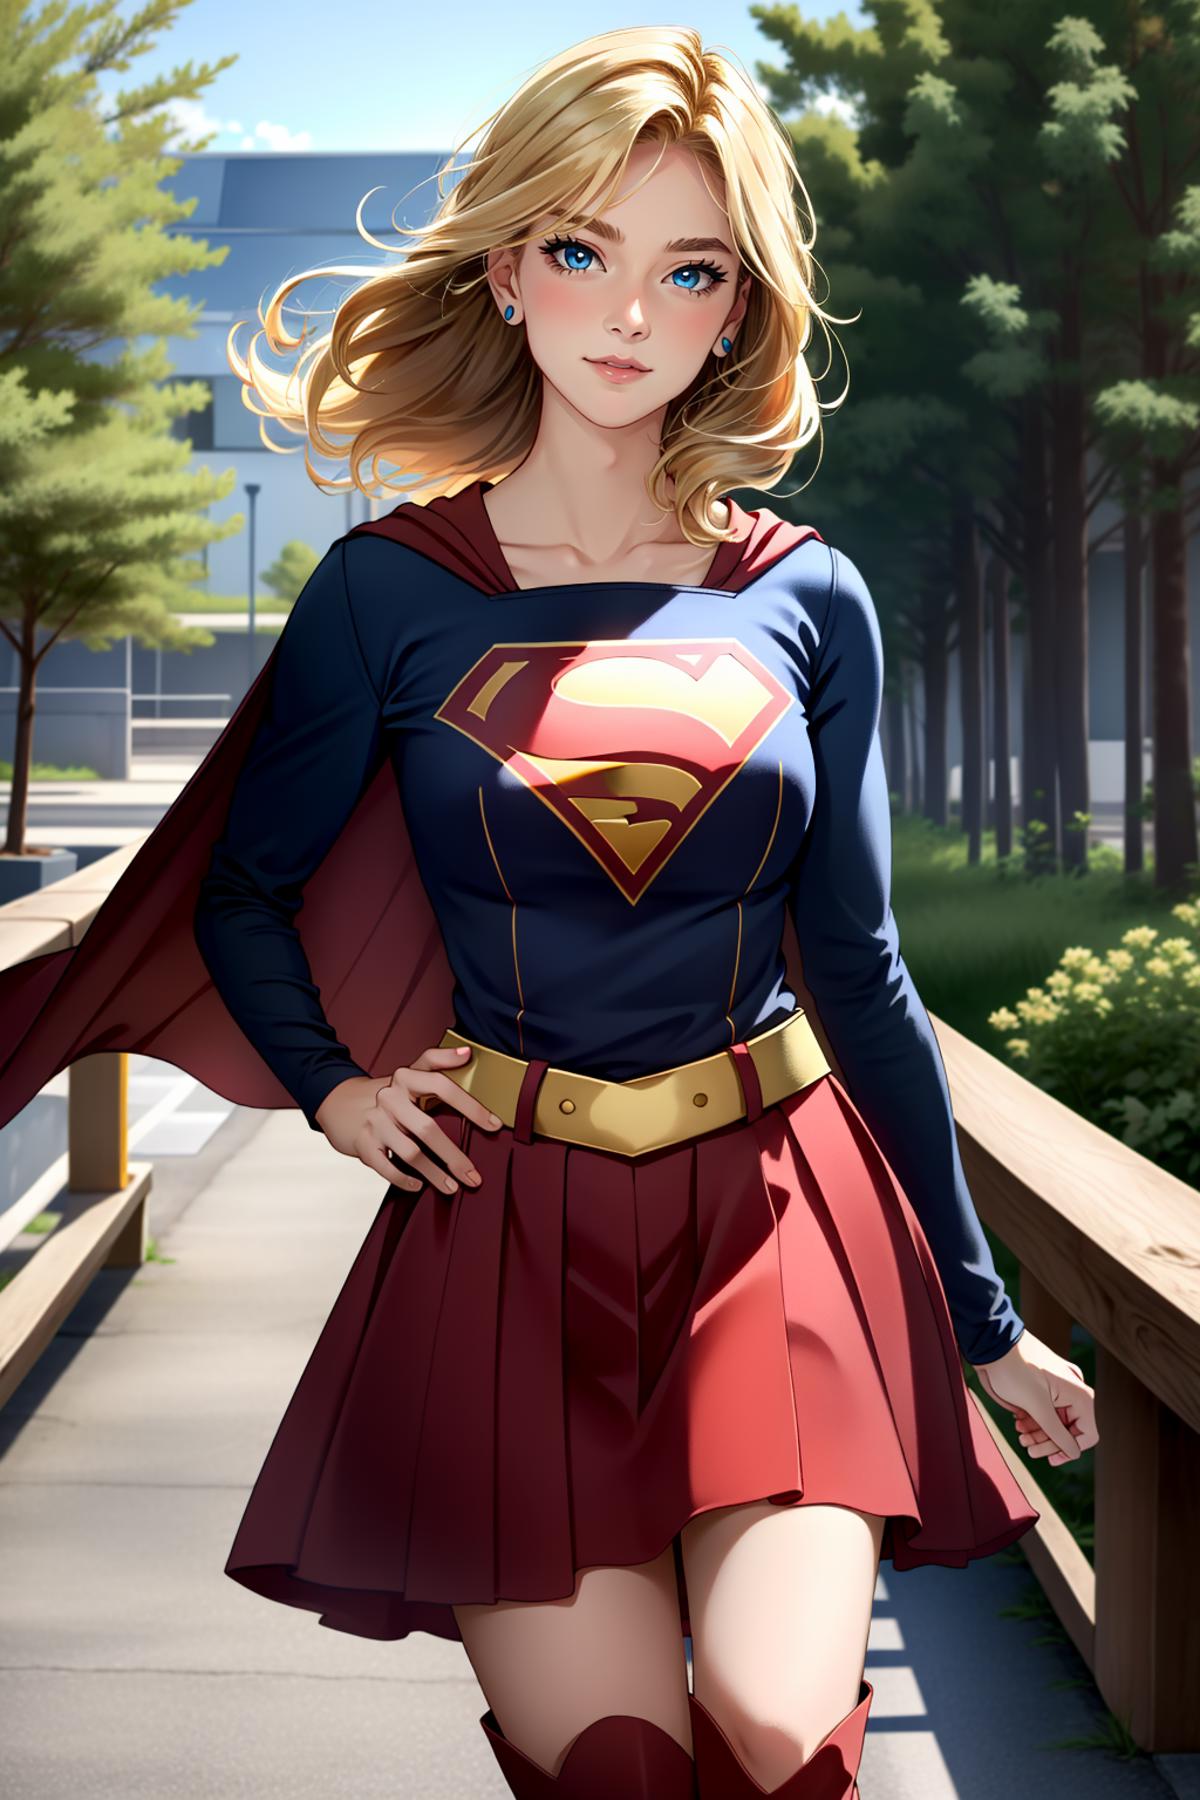 Supergirl (DC Comic) image by GDogz